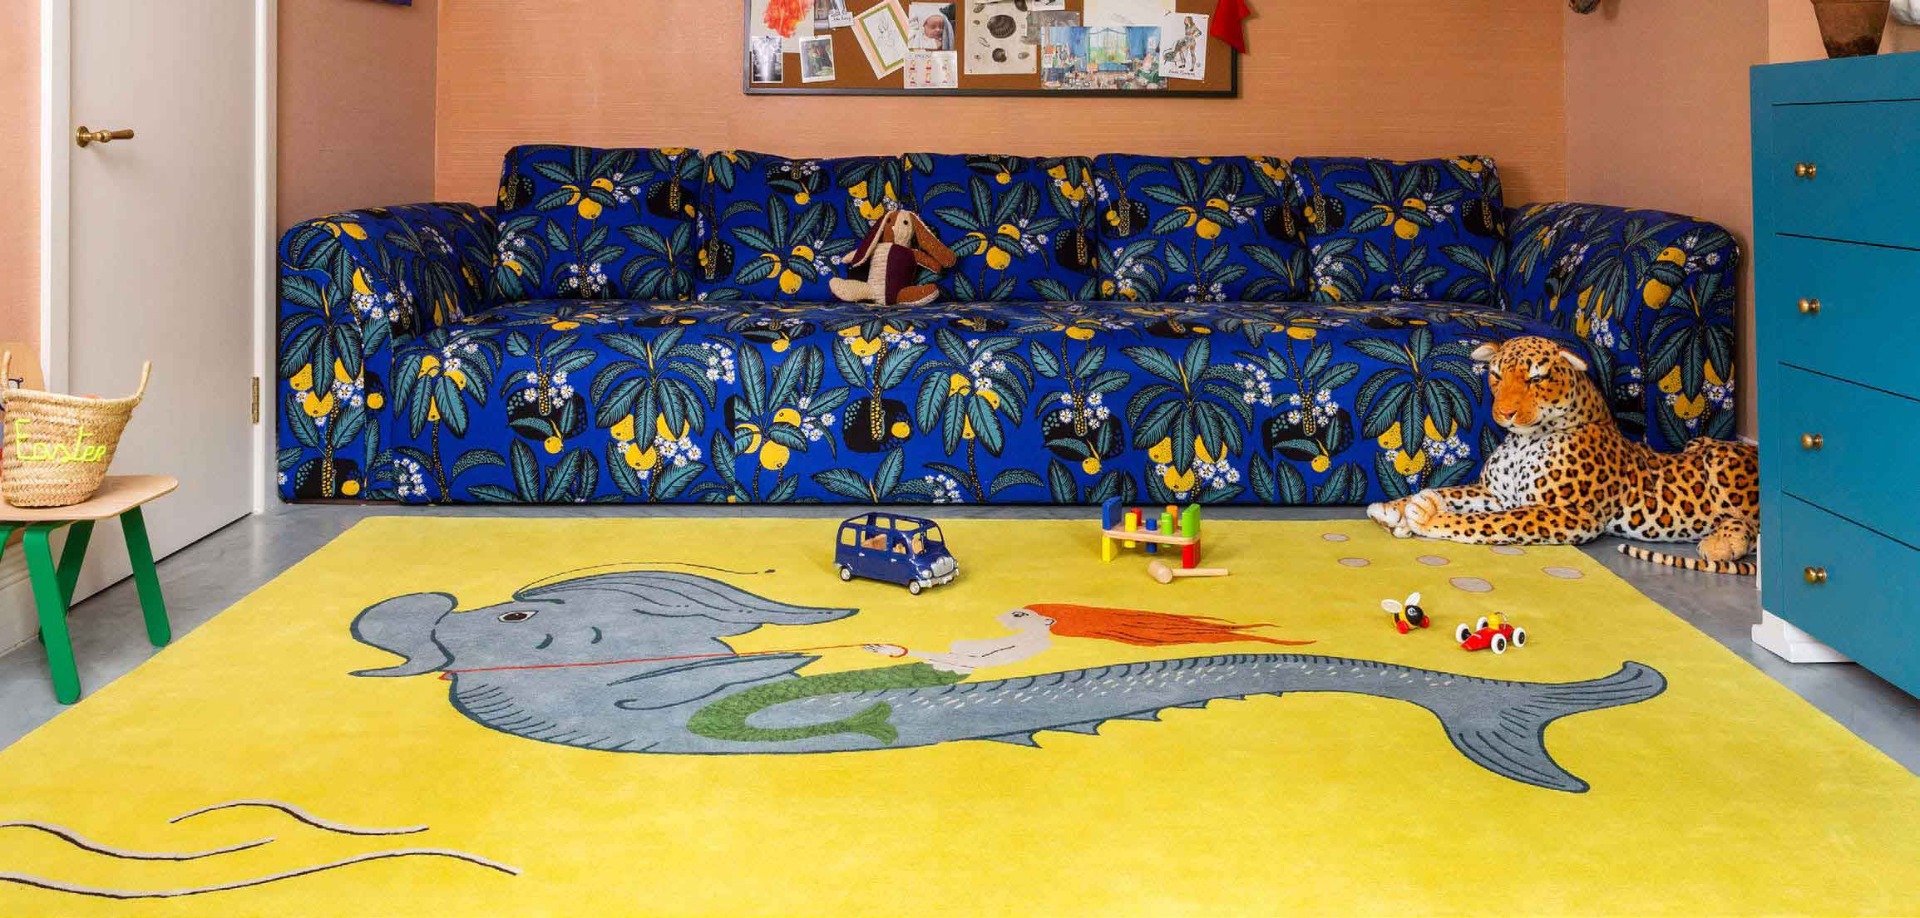 Mermaid Rug by Beata Heuman - rug featured in the children's room